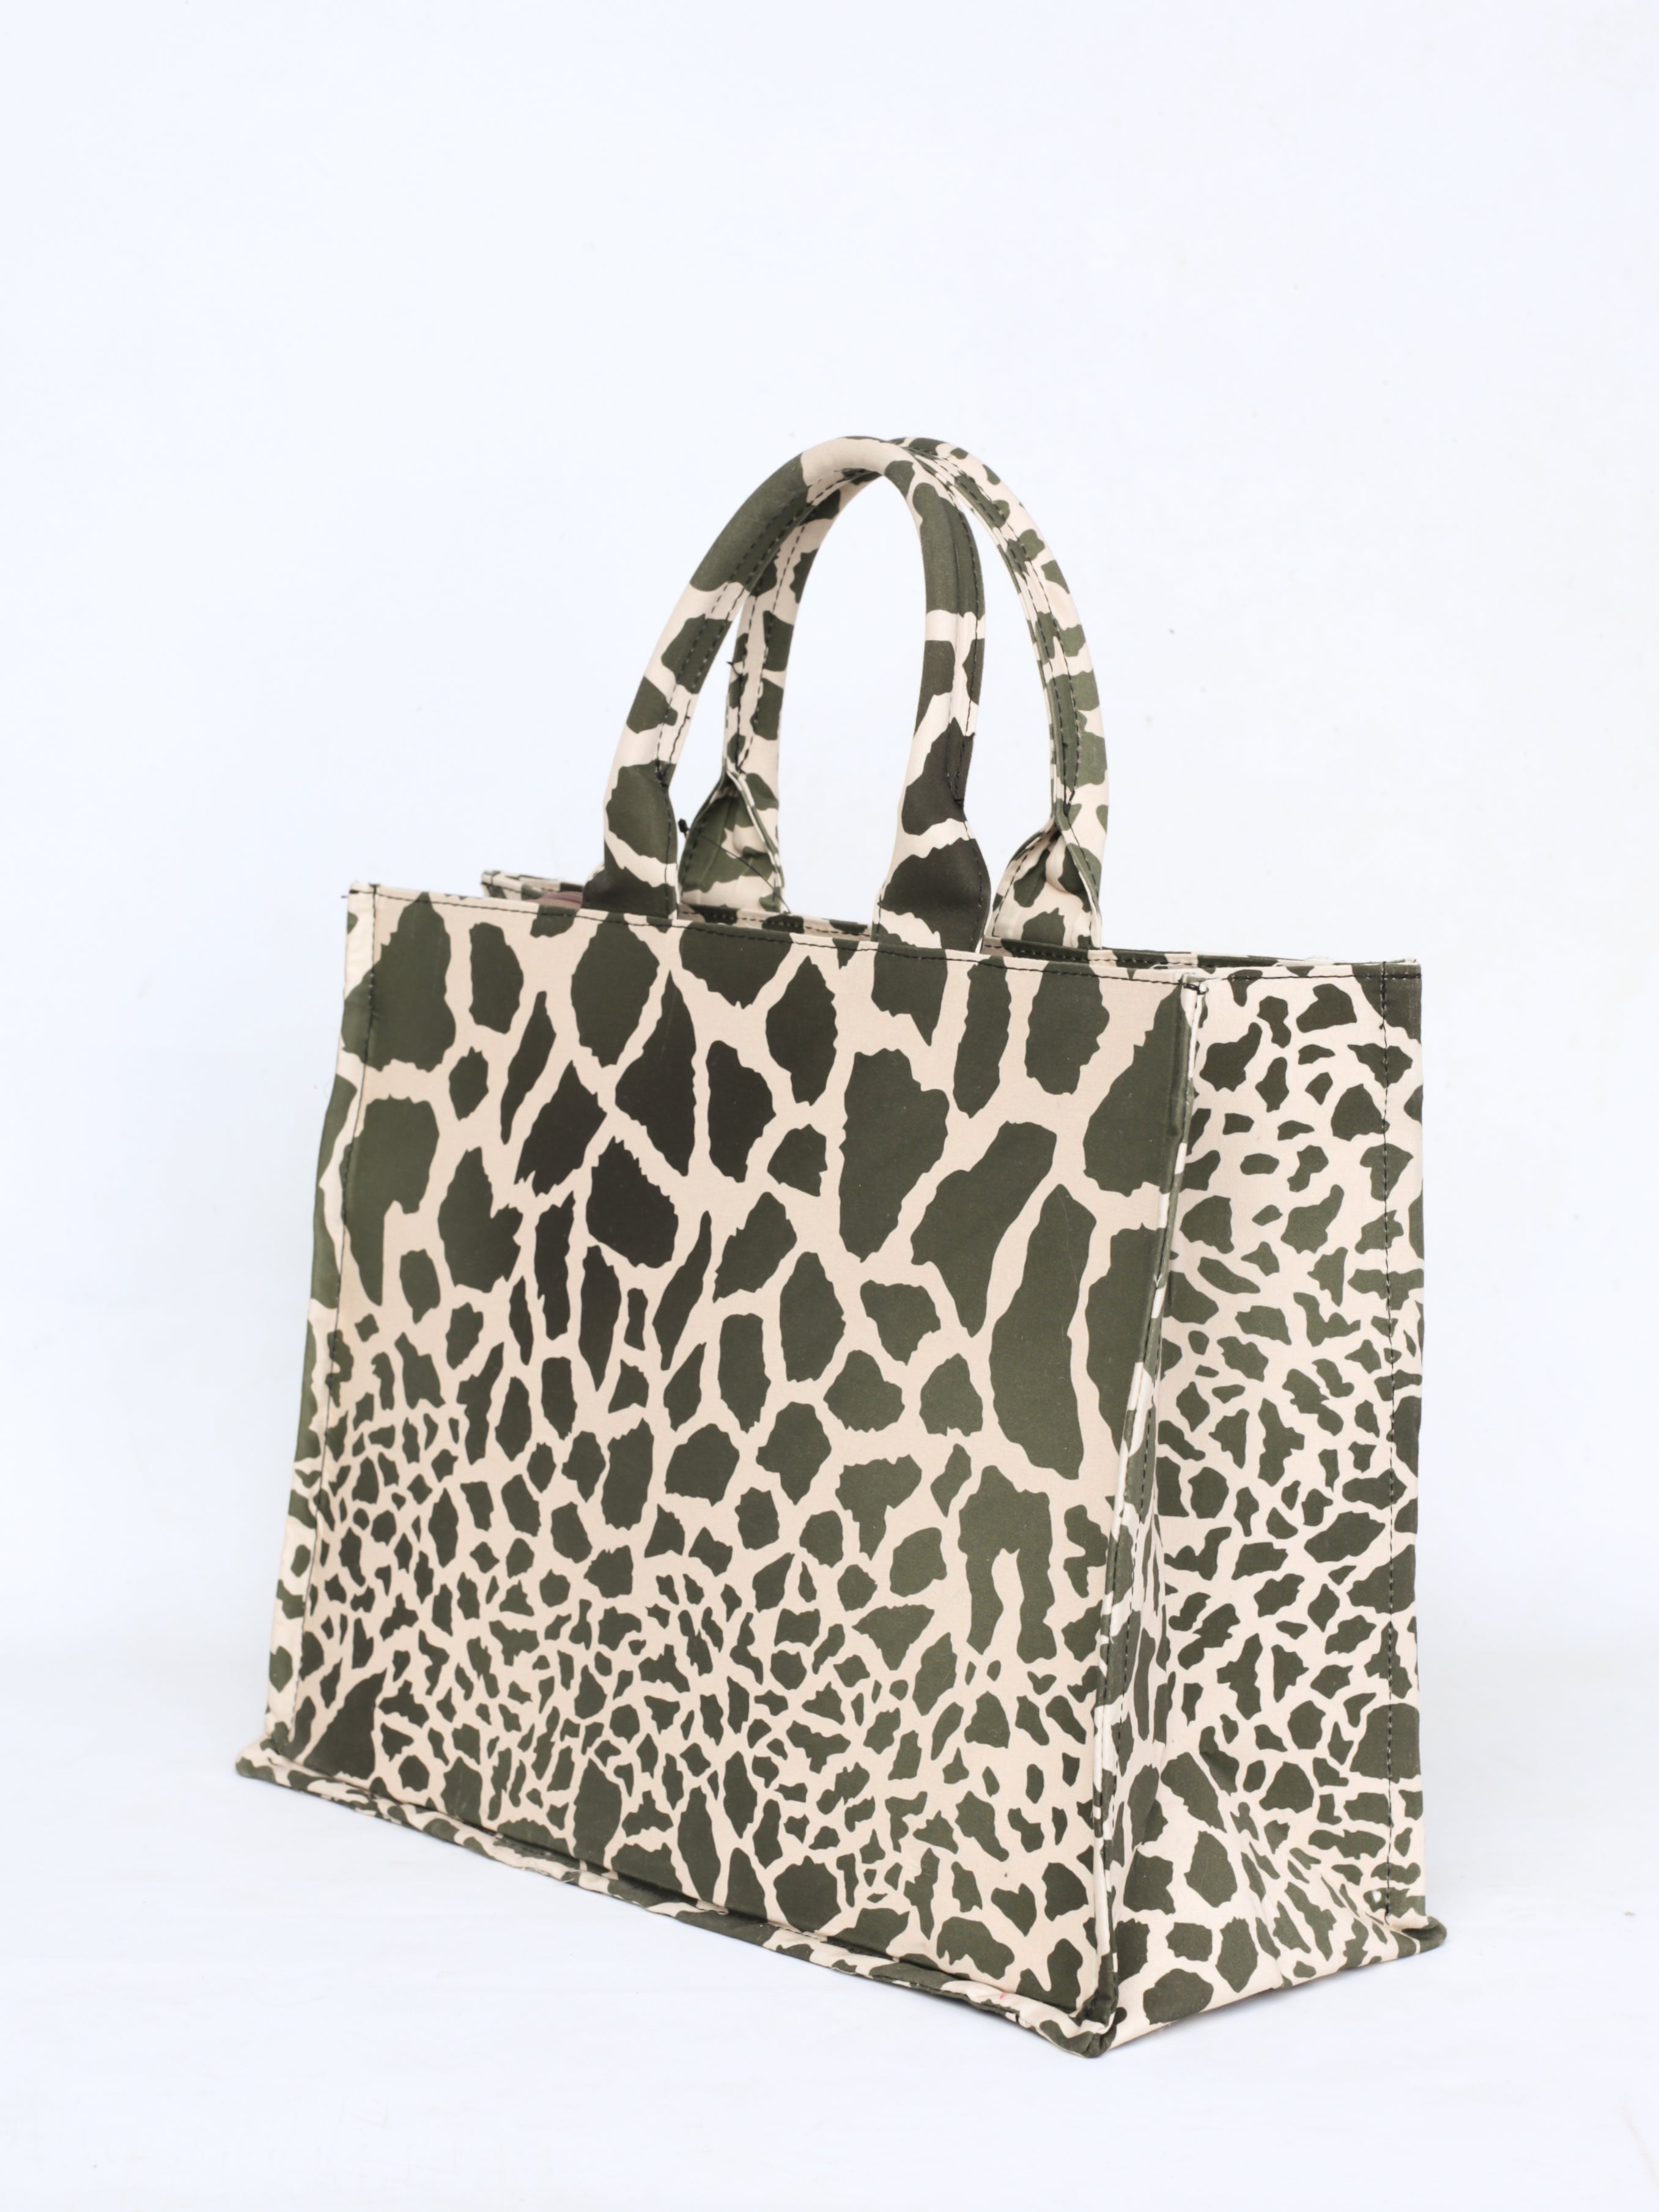 Shopper bag with animal print